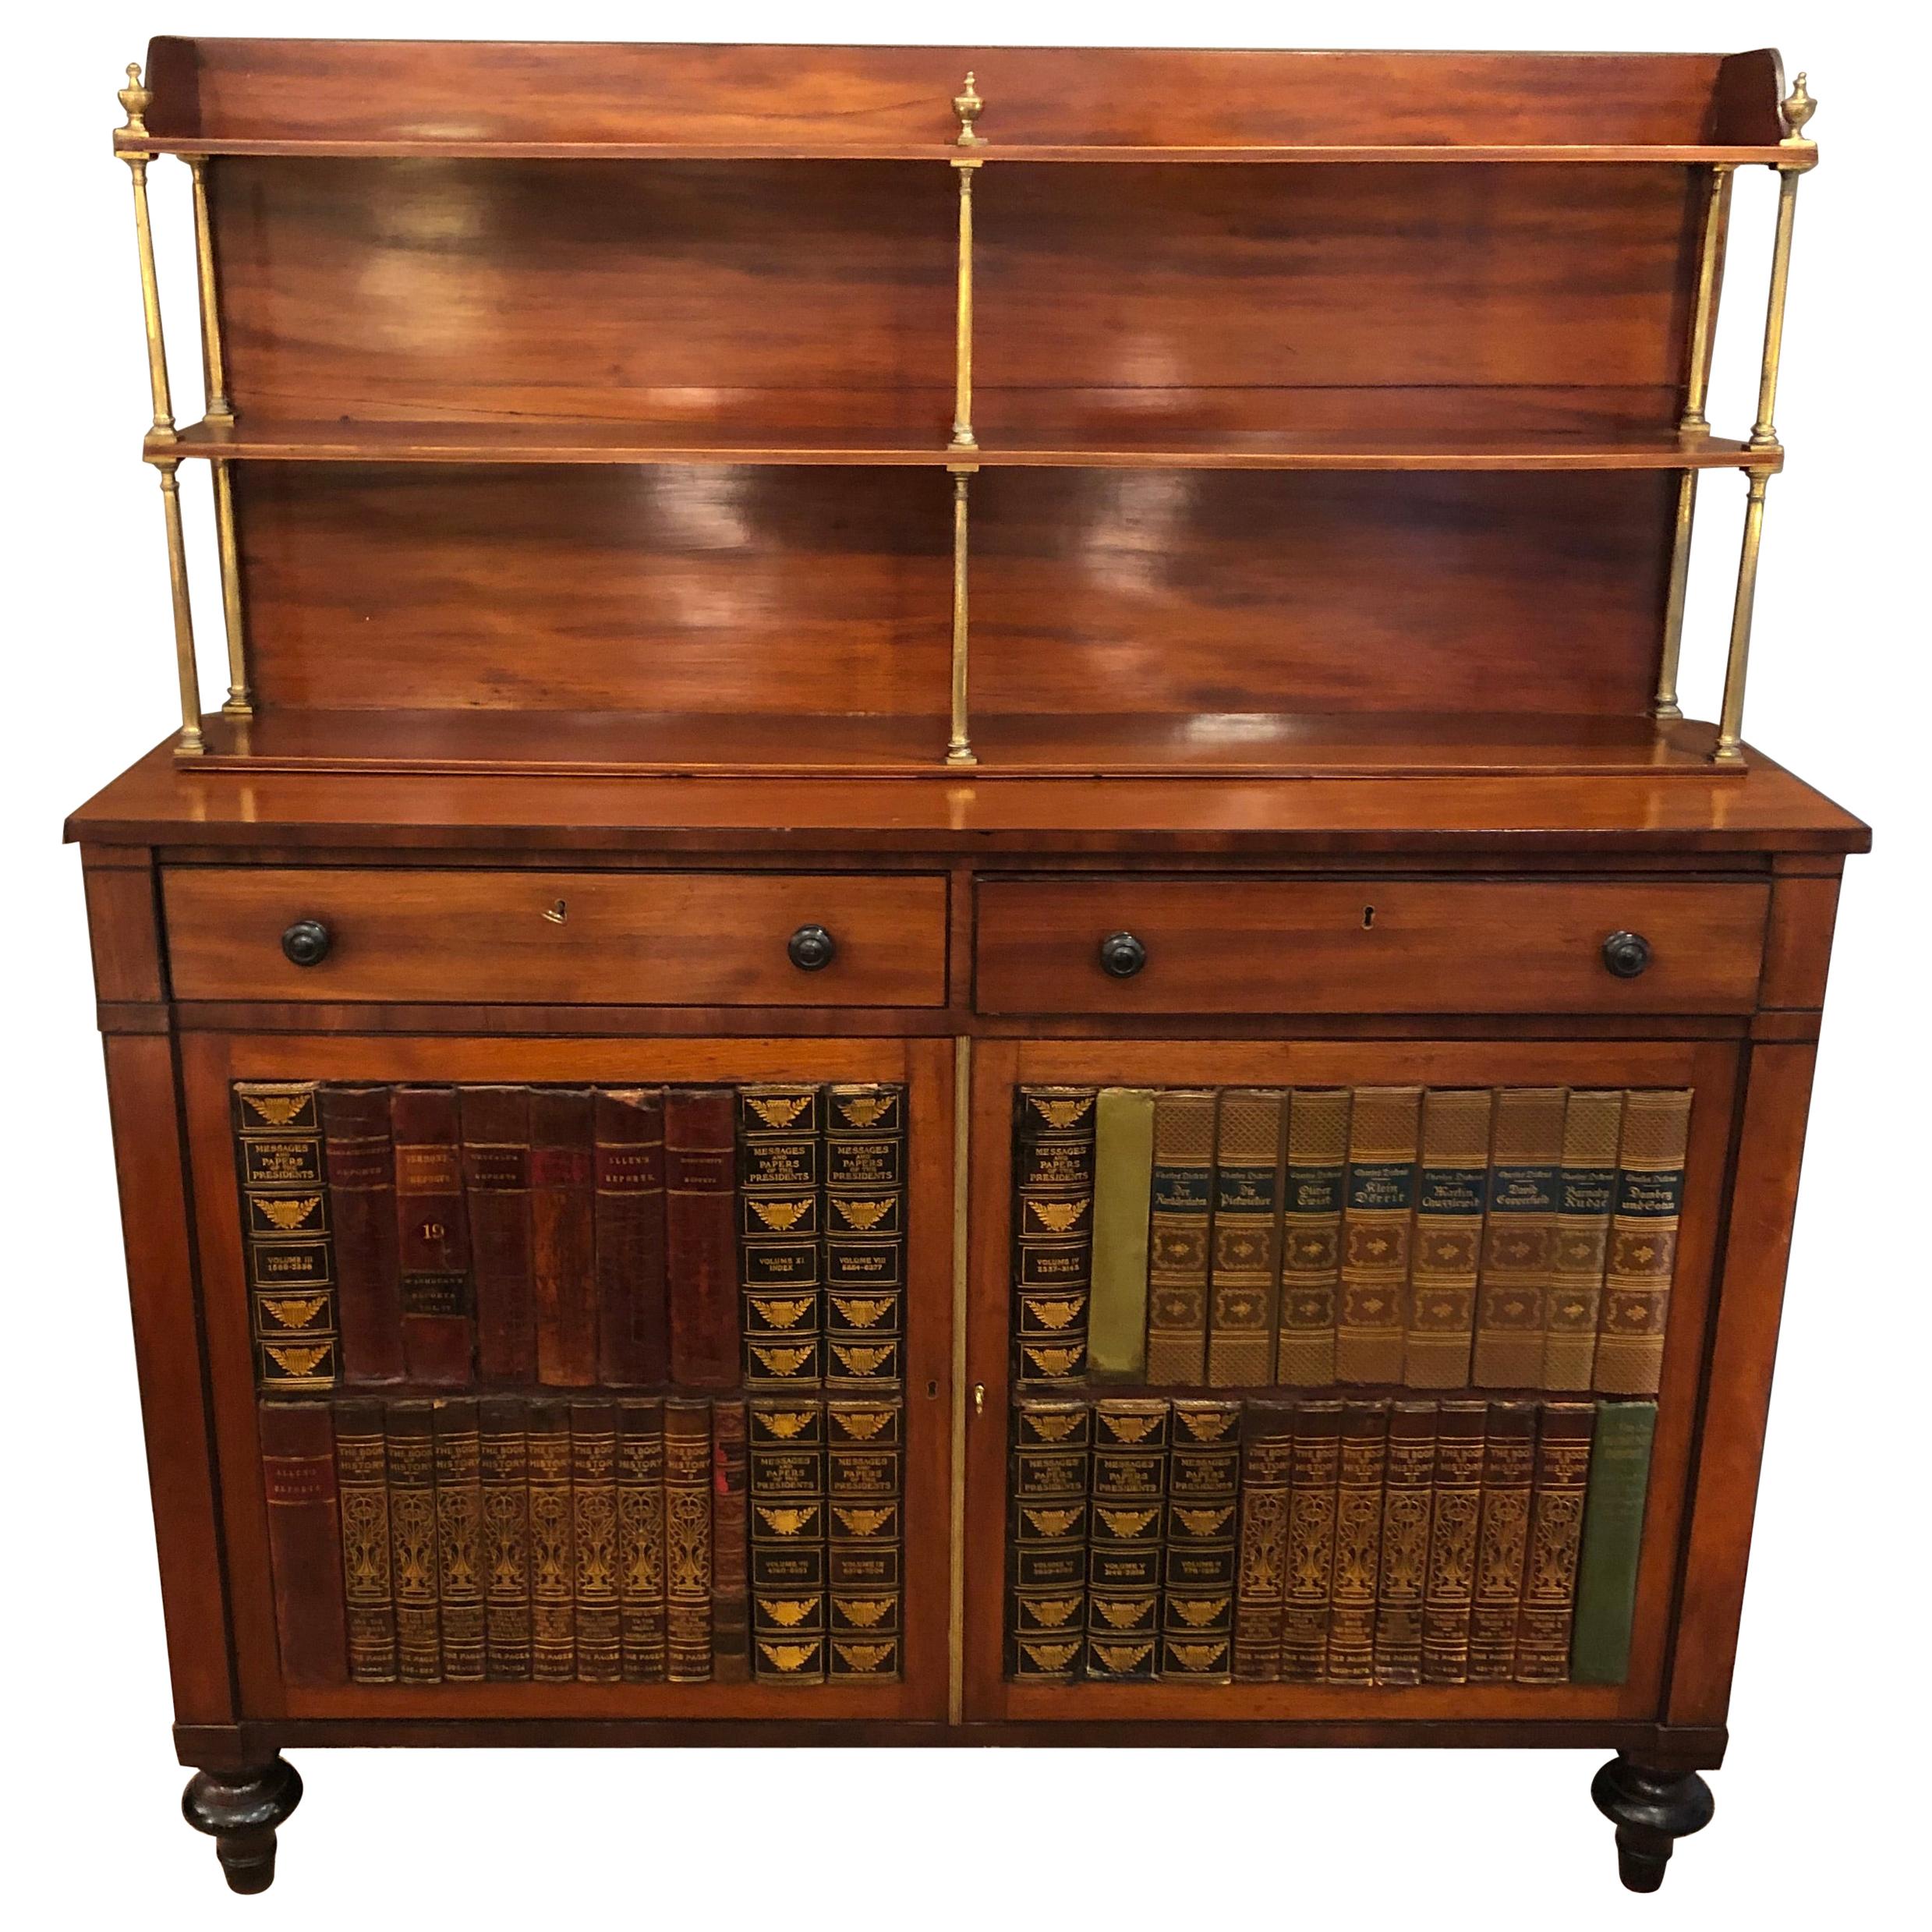 Outstanding Antique English Chiffonier Tromp l'oeil Bookshelf Cabinet